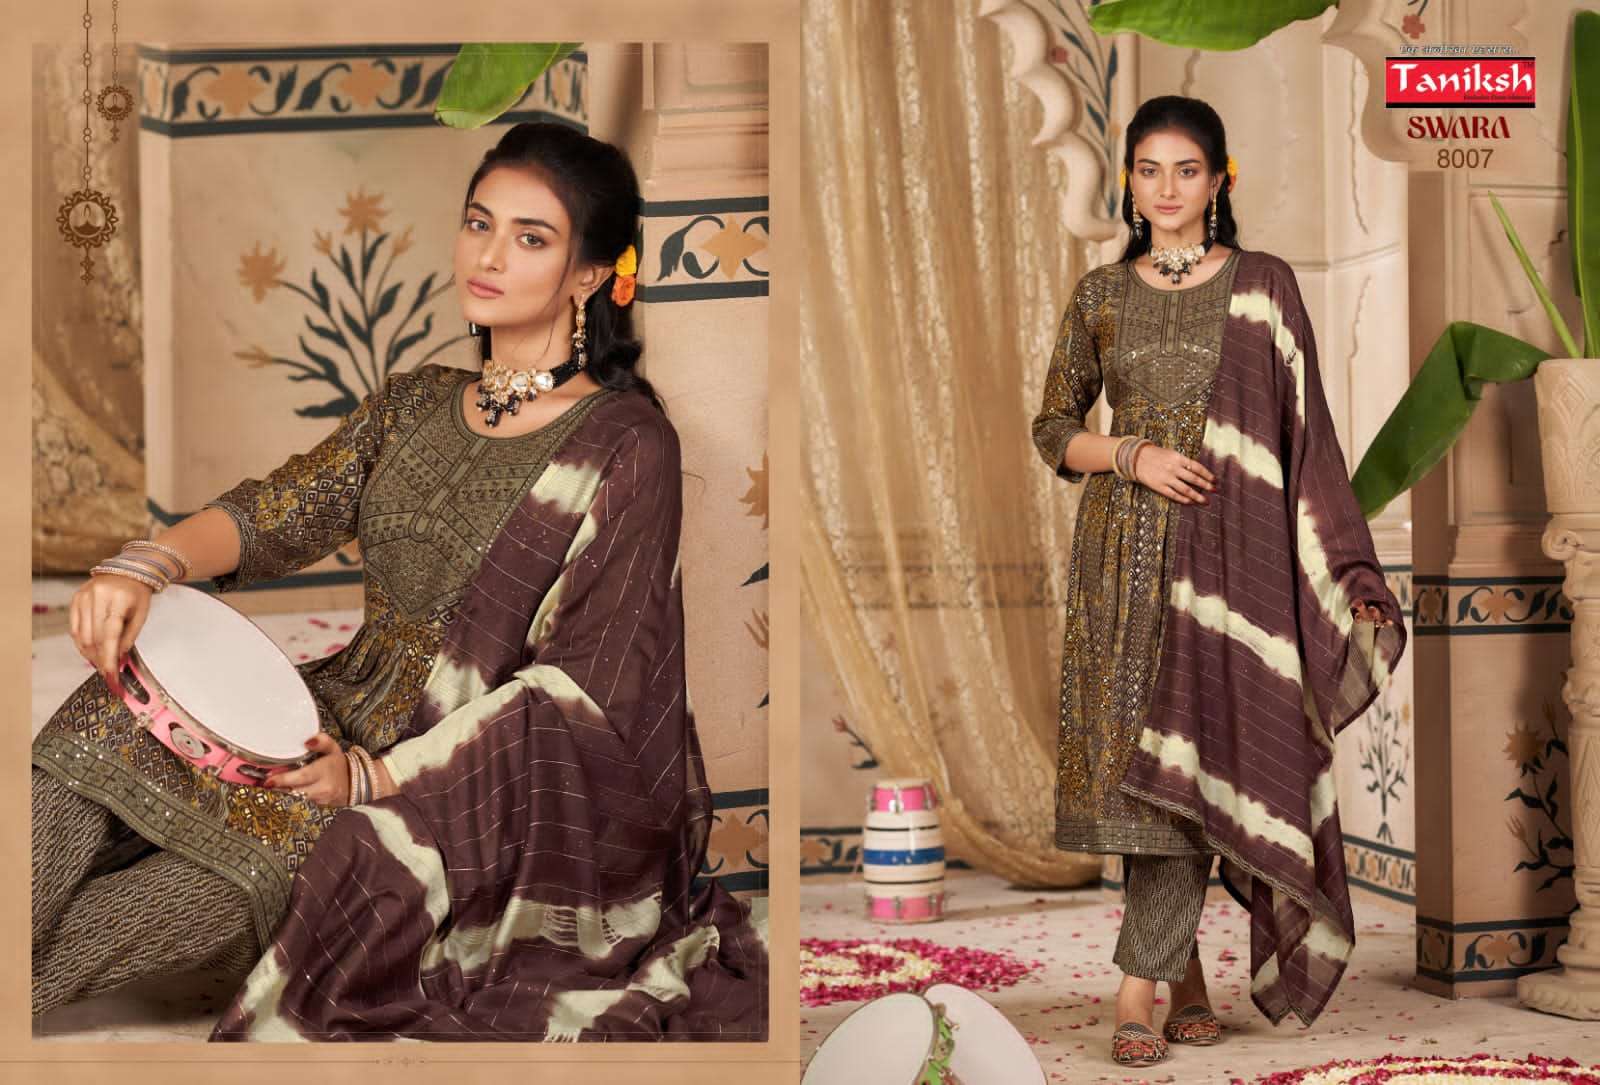 taniksh swara vol-8 8001-8008 series latest designer kurti set wholesaler surat gujarat